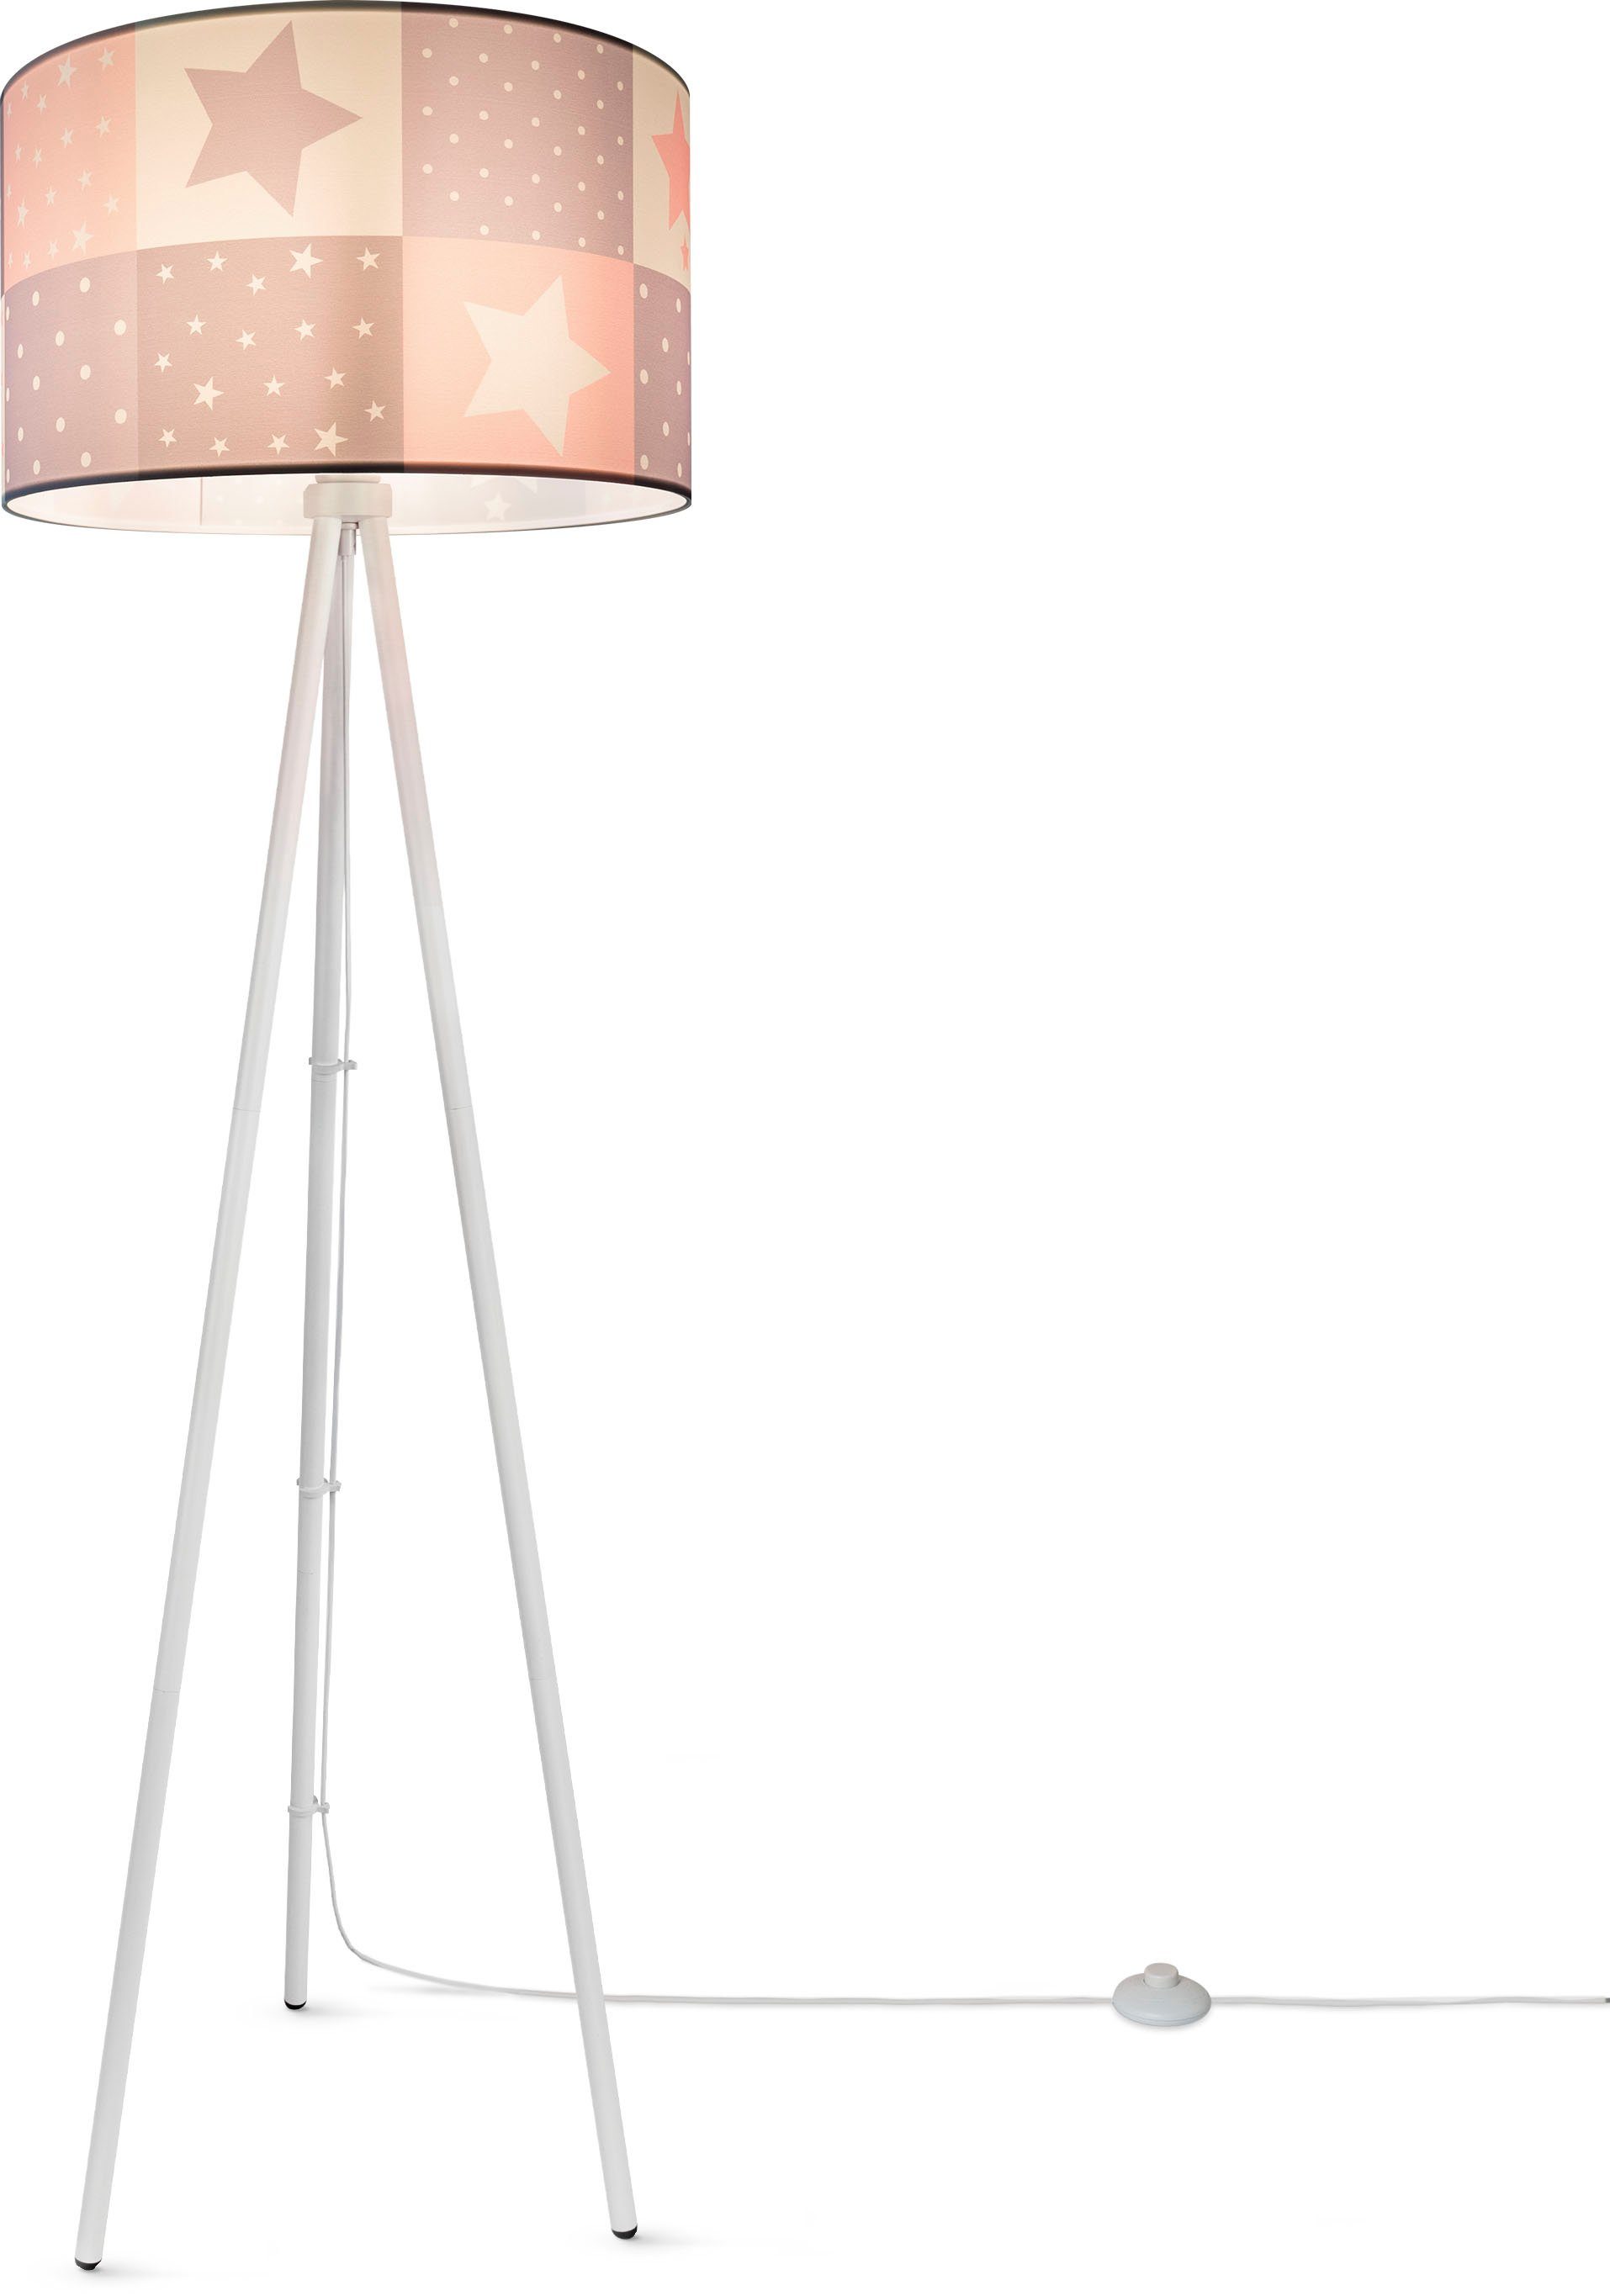 LED Paco Motiv, Kinderlampe Kinderzimmer Sternen Lampe ohne Trina Leuchtmittel, E27 Cosmo, Home Stehlampe Stehleuchte